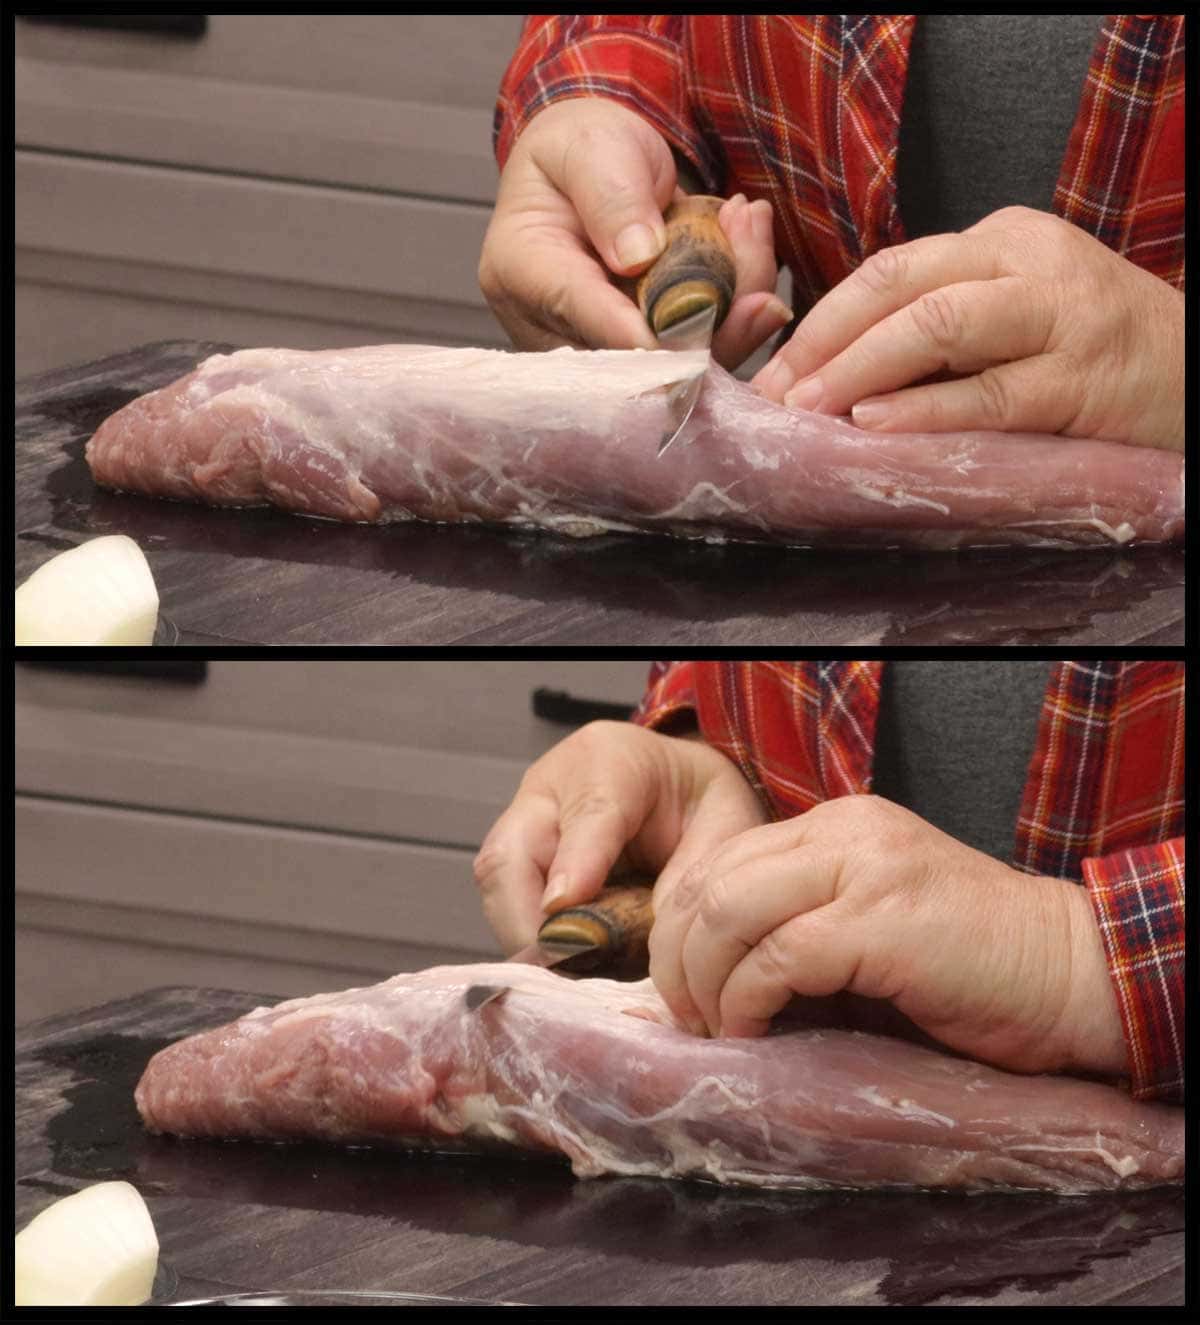 trimming silverskin from pork tenderloin.